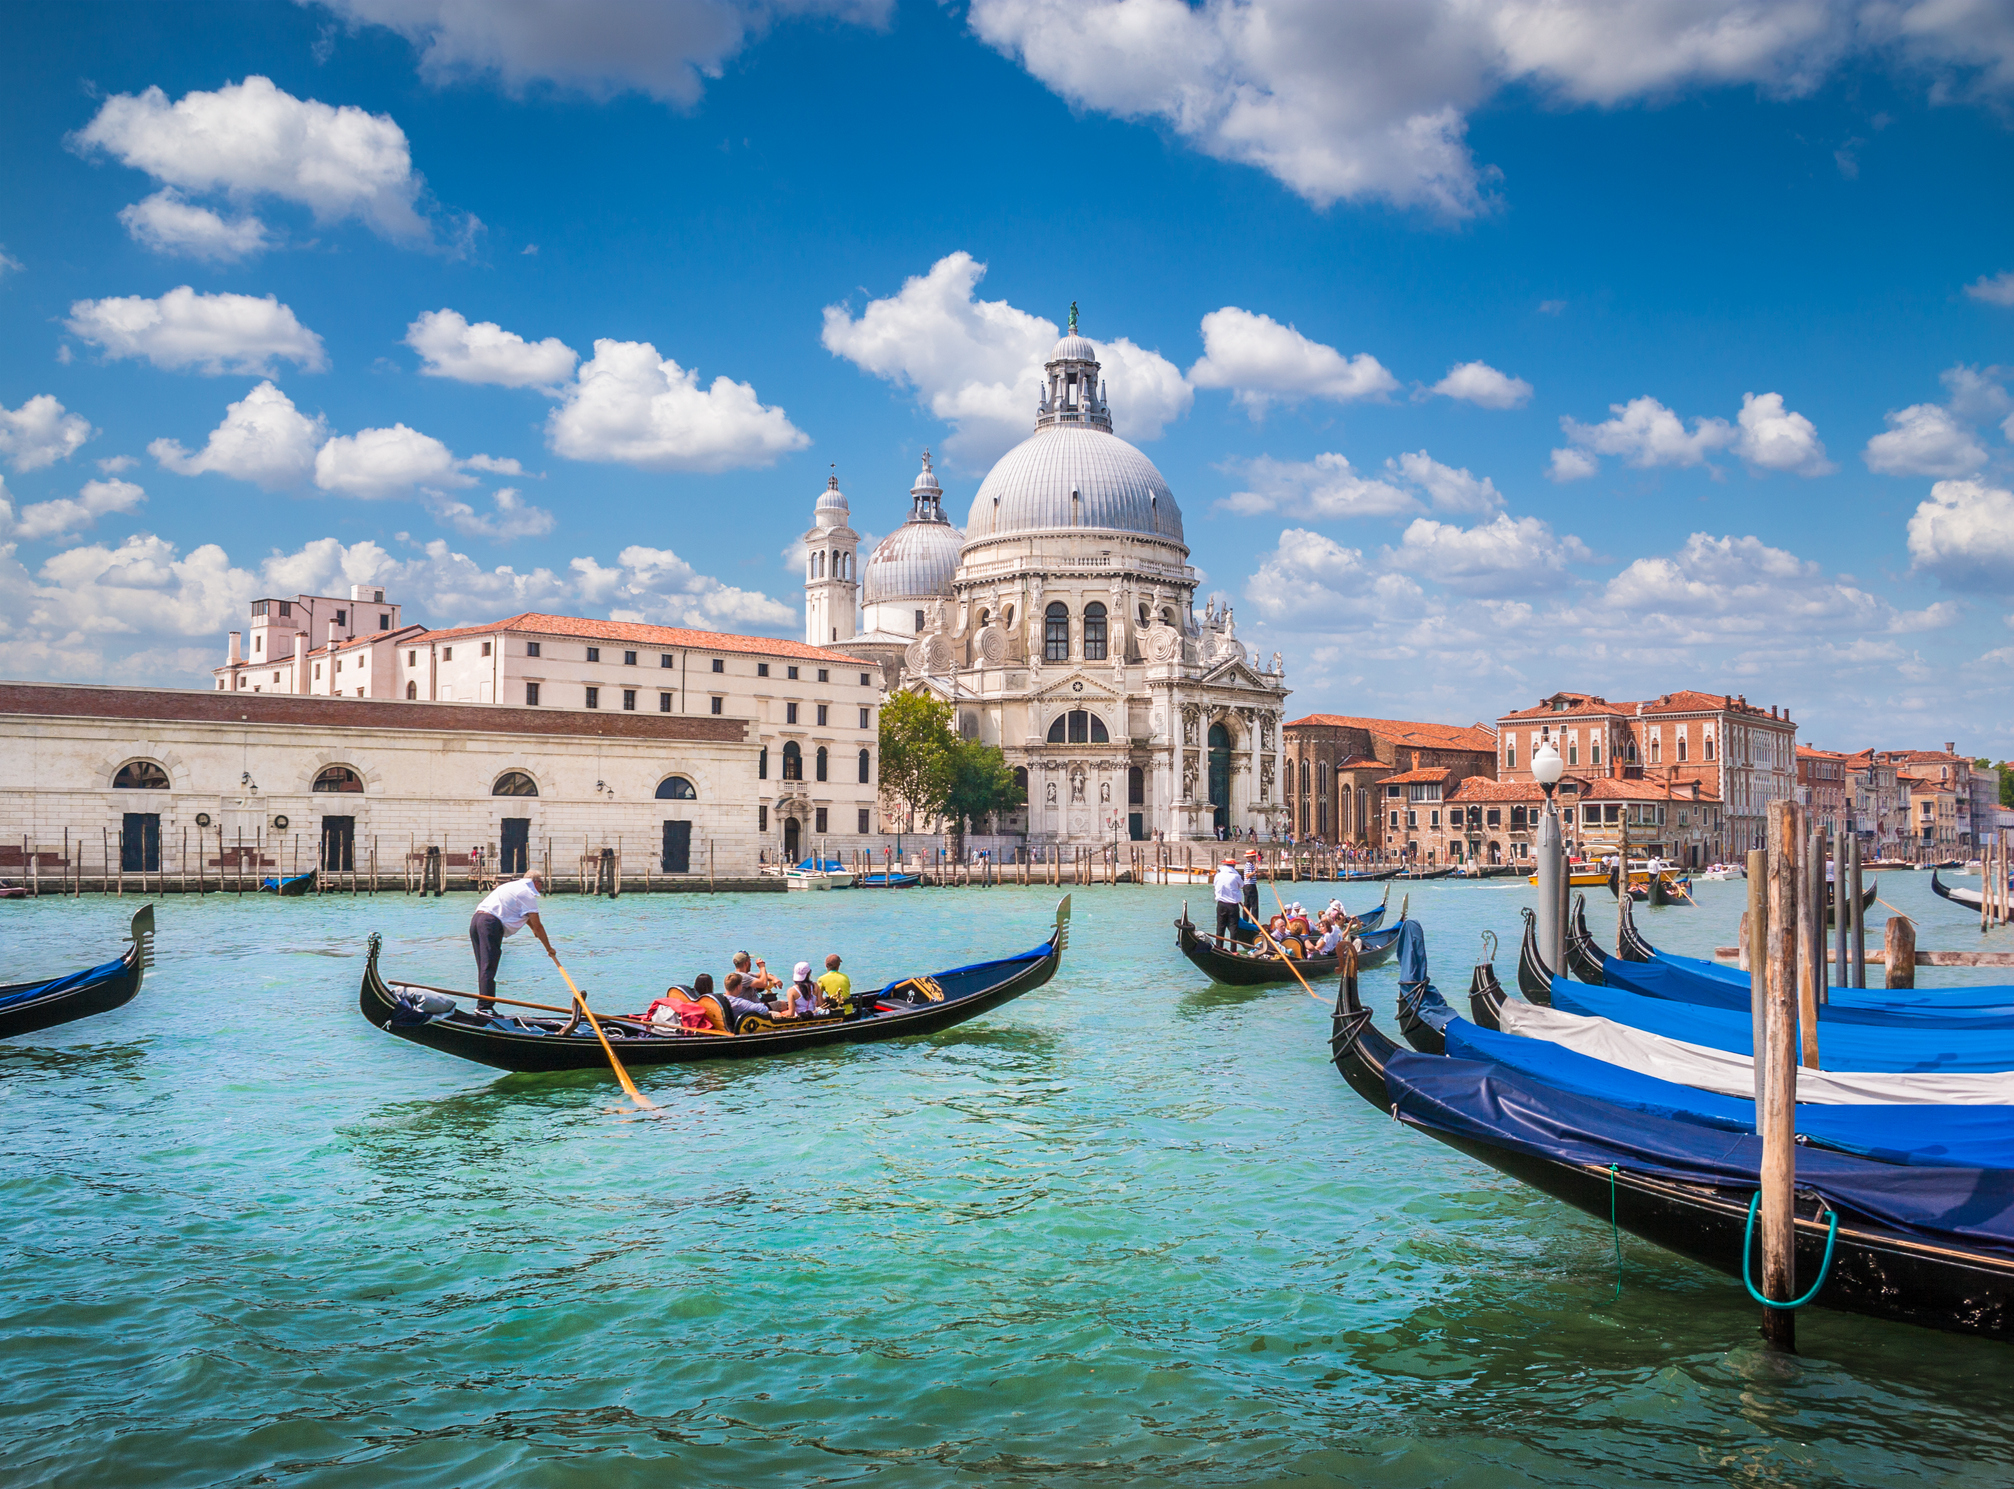 The Basilica 
di Santa Maria makes a stunning backdrop to Venice’s famous canals